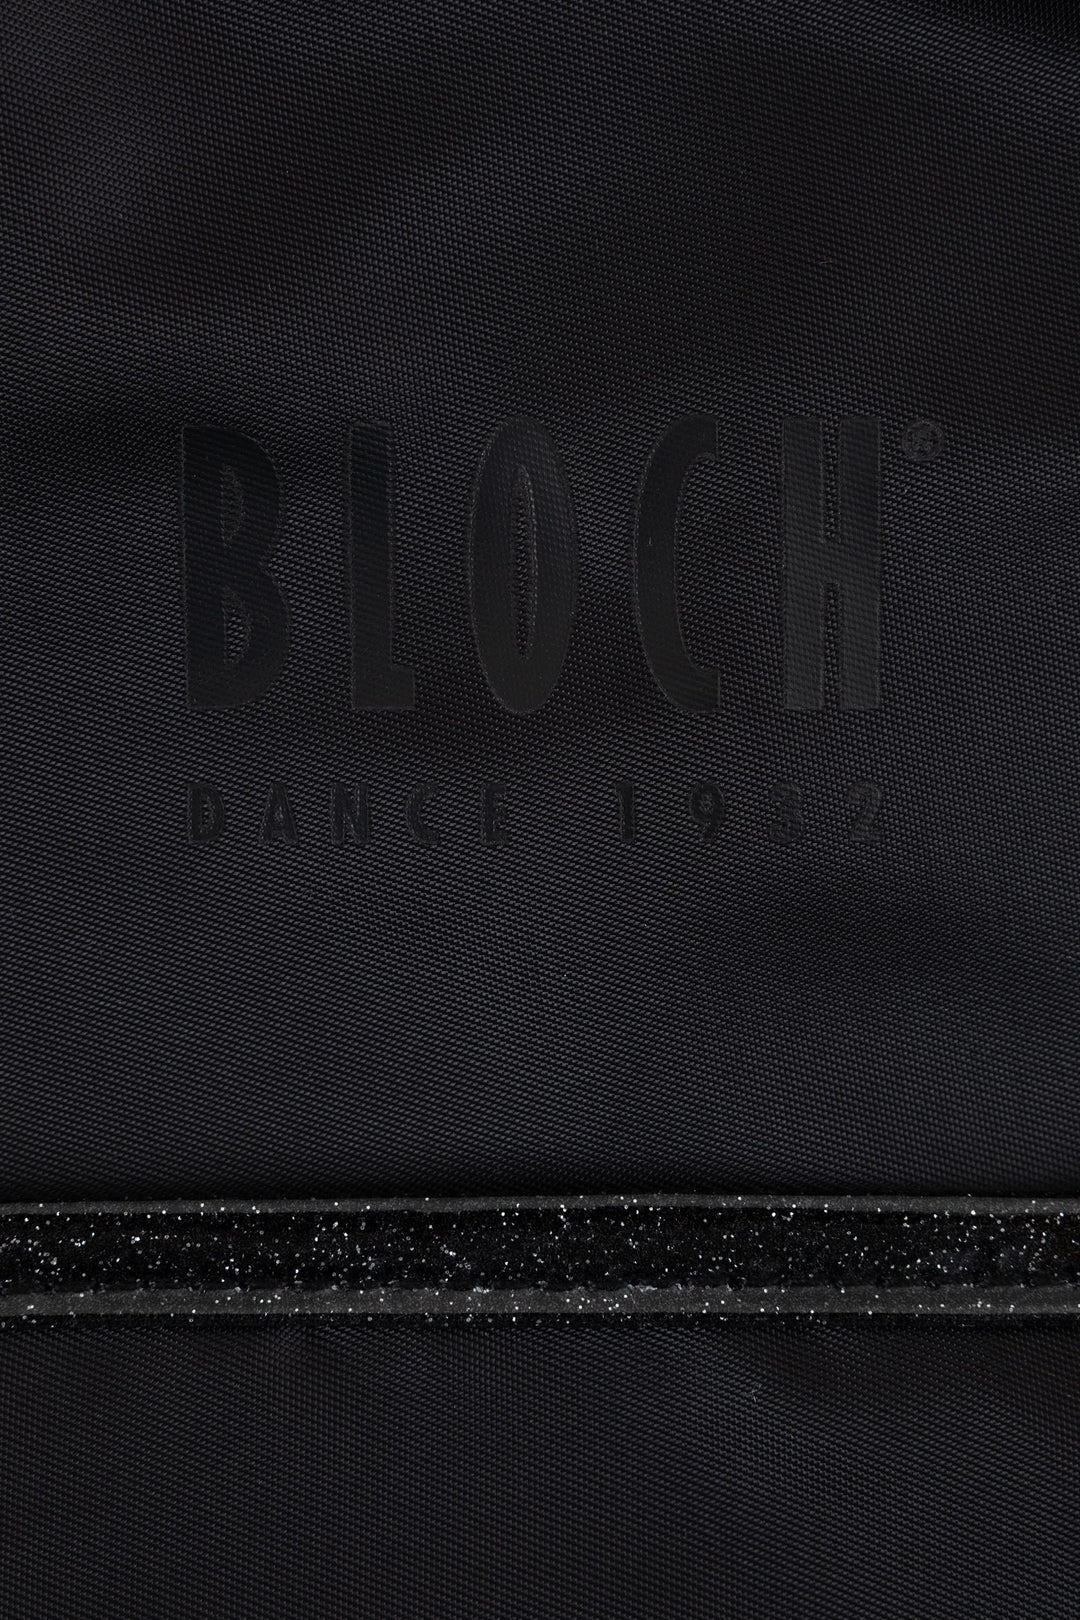 Bloch Recital Dance Bag Black